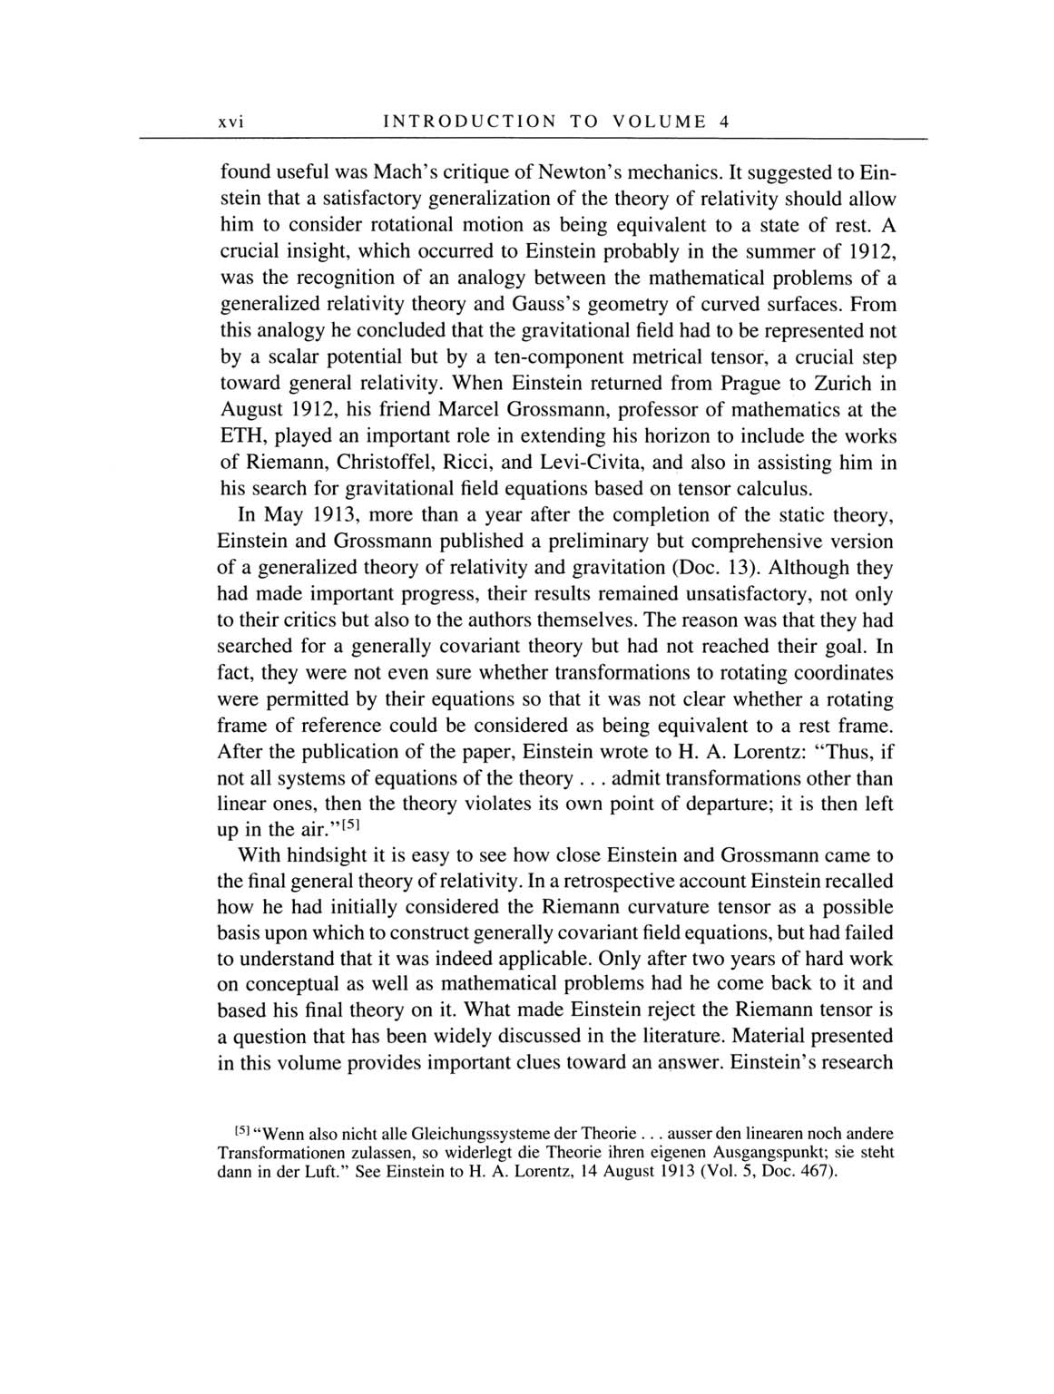 Volume 4: The Swiss Years: Writings 1912-1914 page xvi